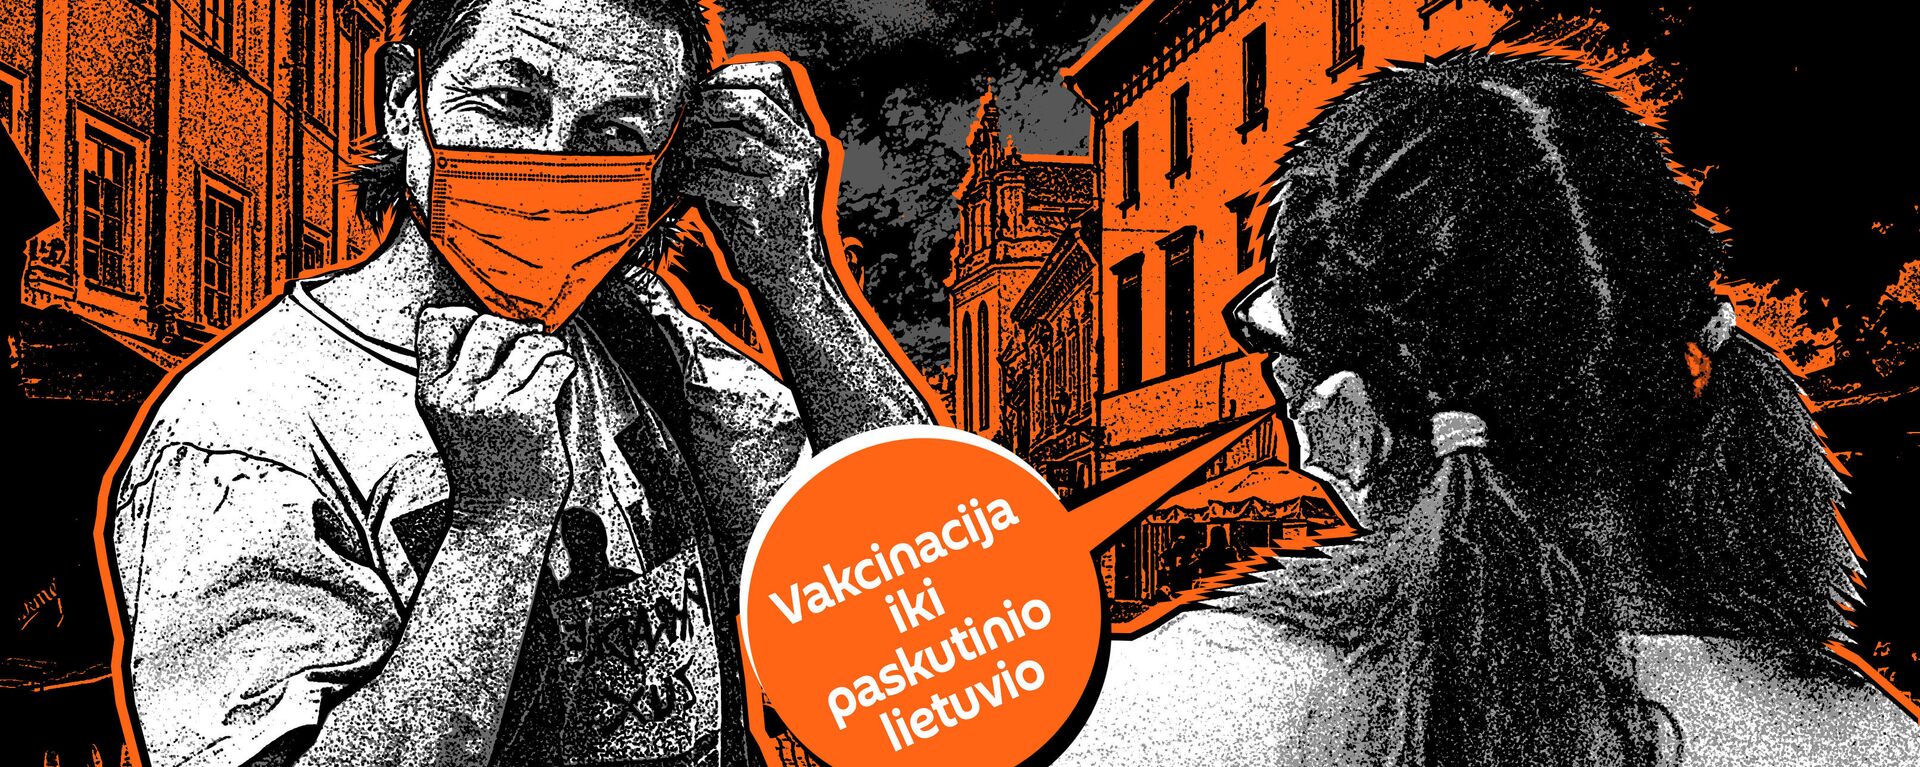 Vakcinacija iki paskutinio lietuvio - Sputnik Lietuva, 1920, 03.09.2021